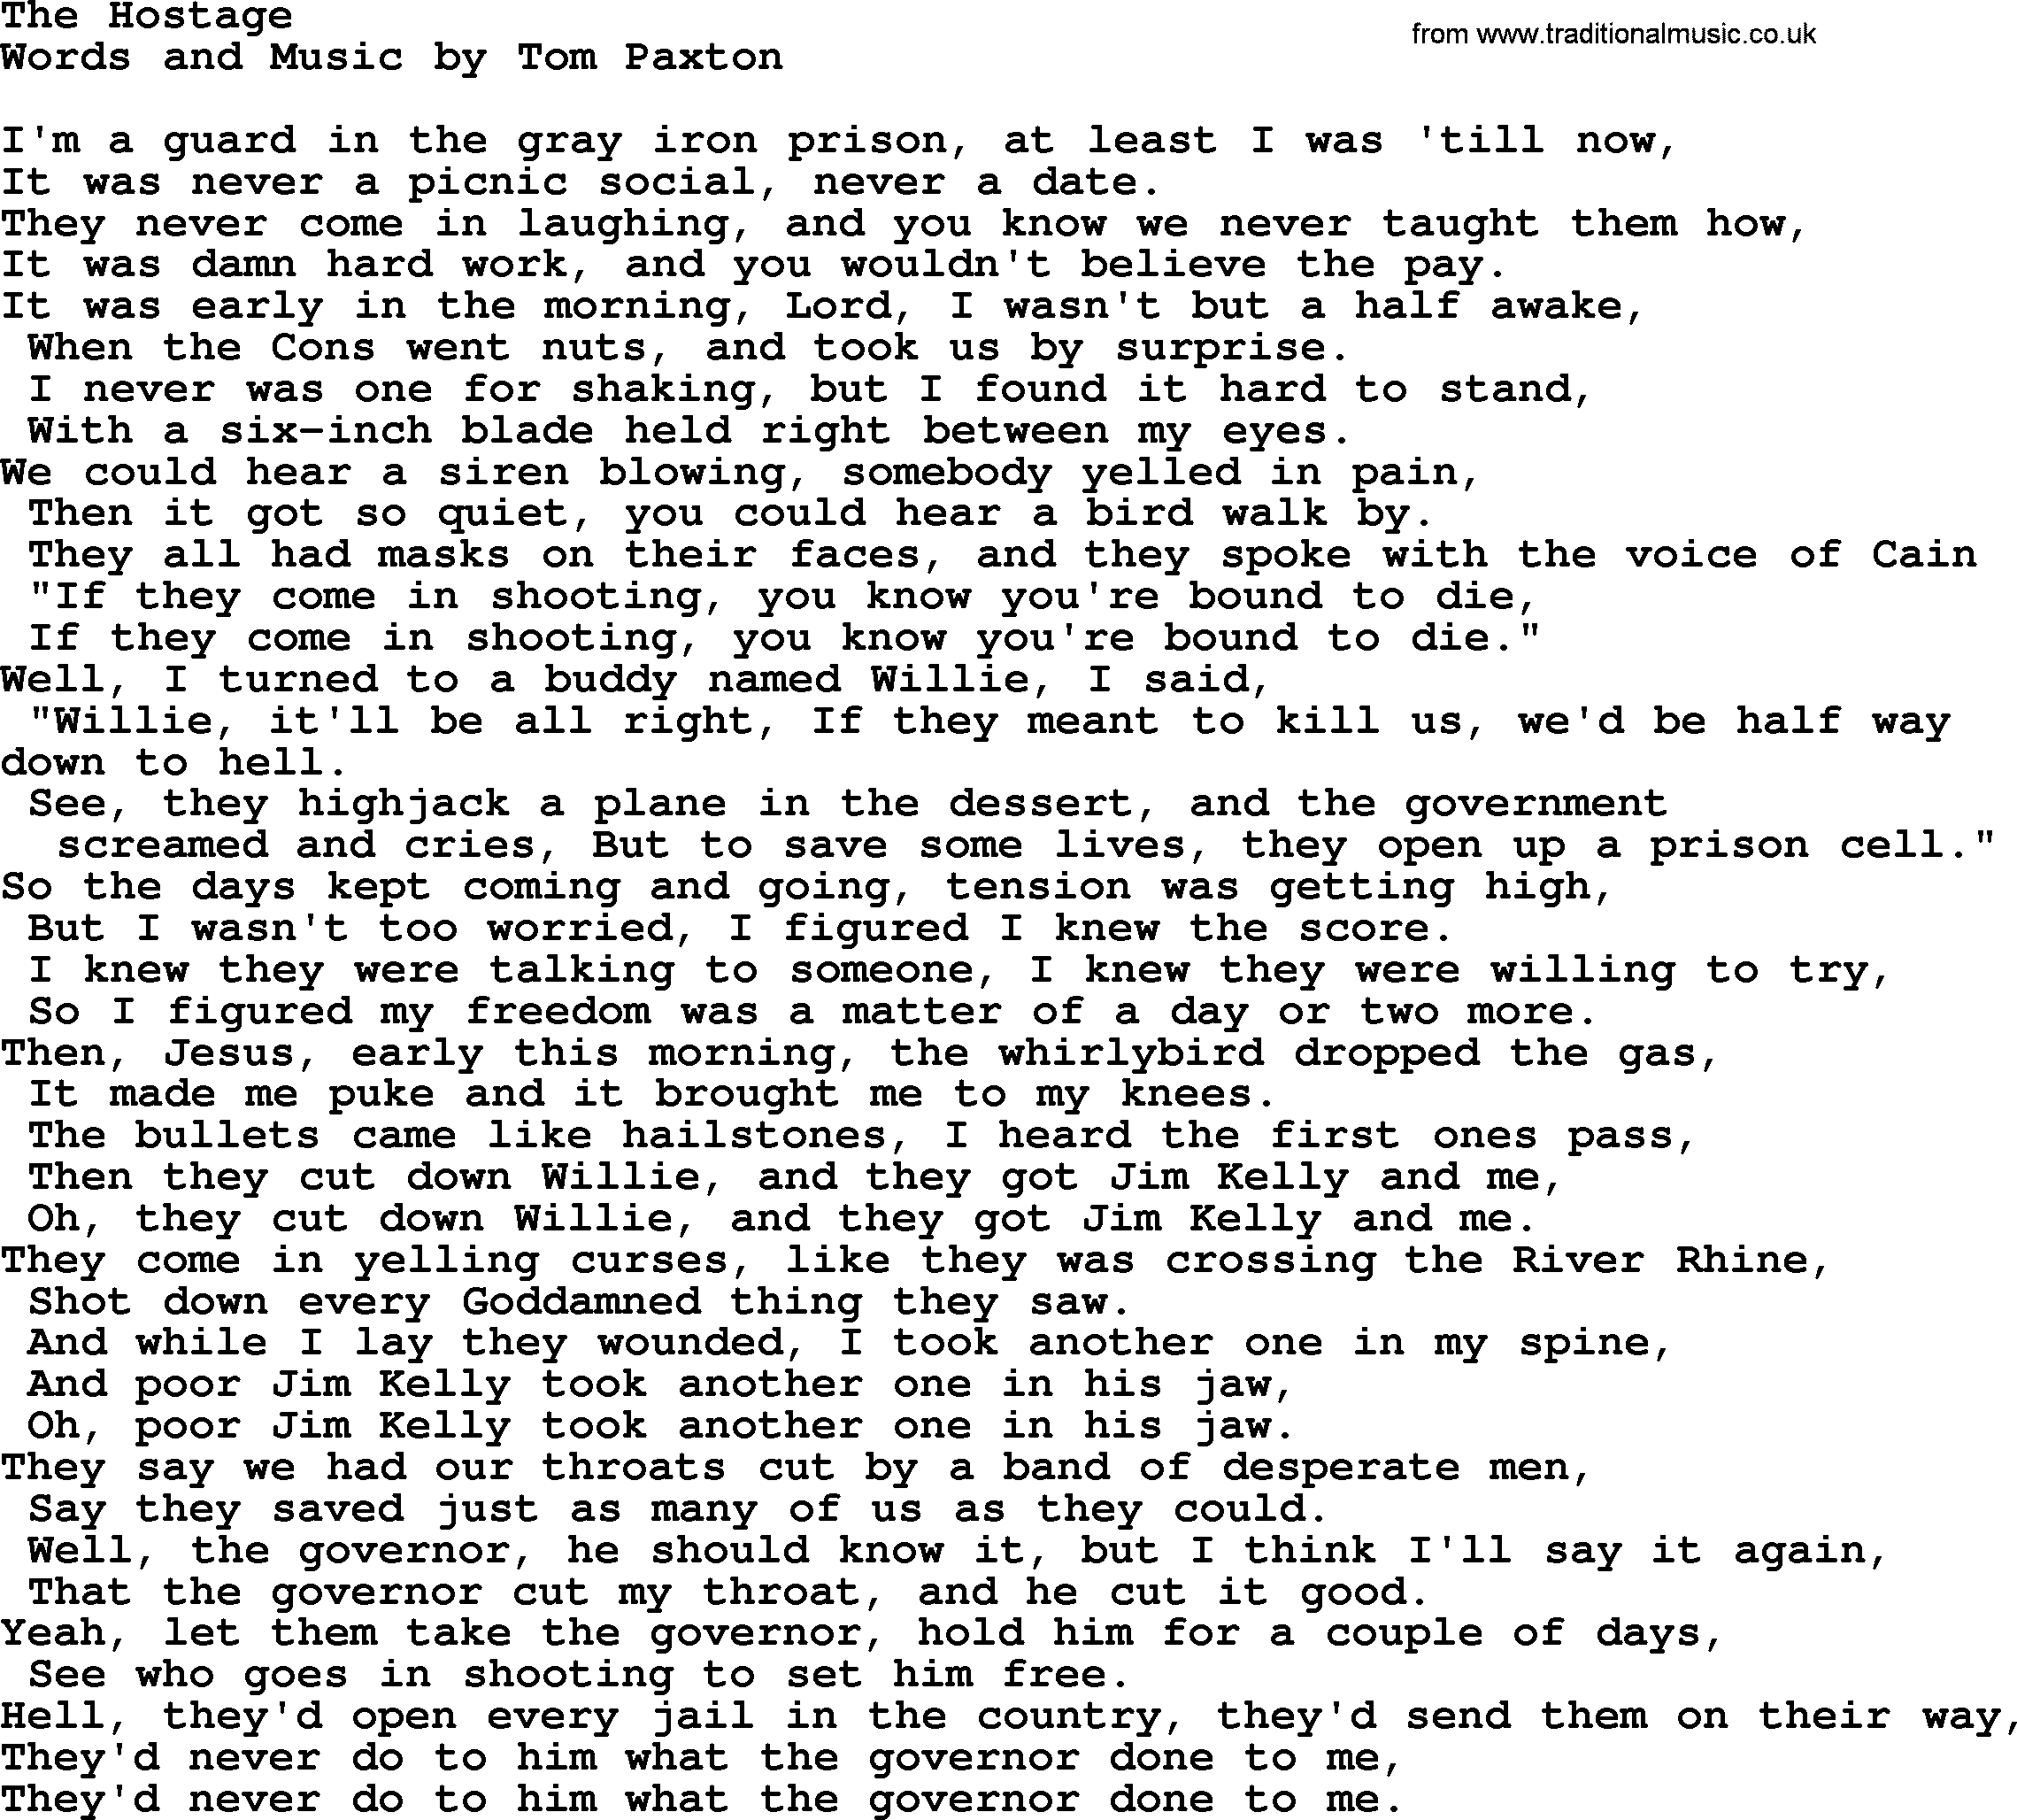 Tom Paxton song: The Hostage, lyrics